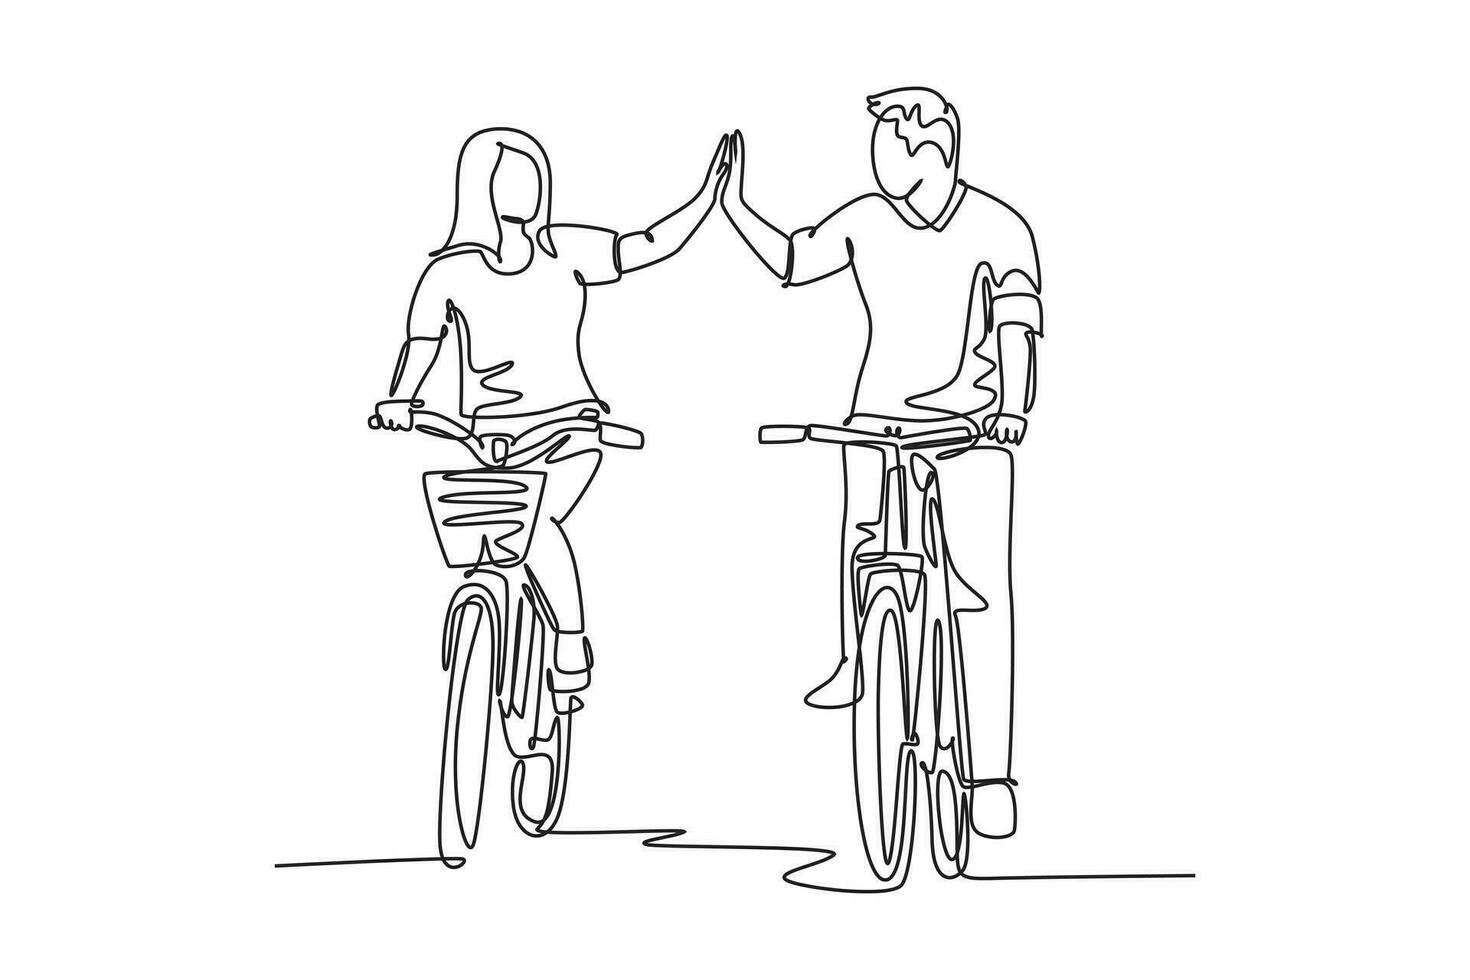 soltero uno línea dibujo joven contento Pareja montando bicicleta románticamente participación manos juntos a al aire libre parque. amor relación concepto. moderno continuo línea dibujar diseño gráfico vector ilustración